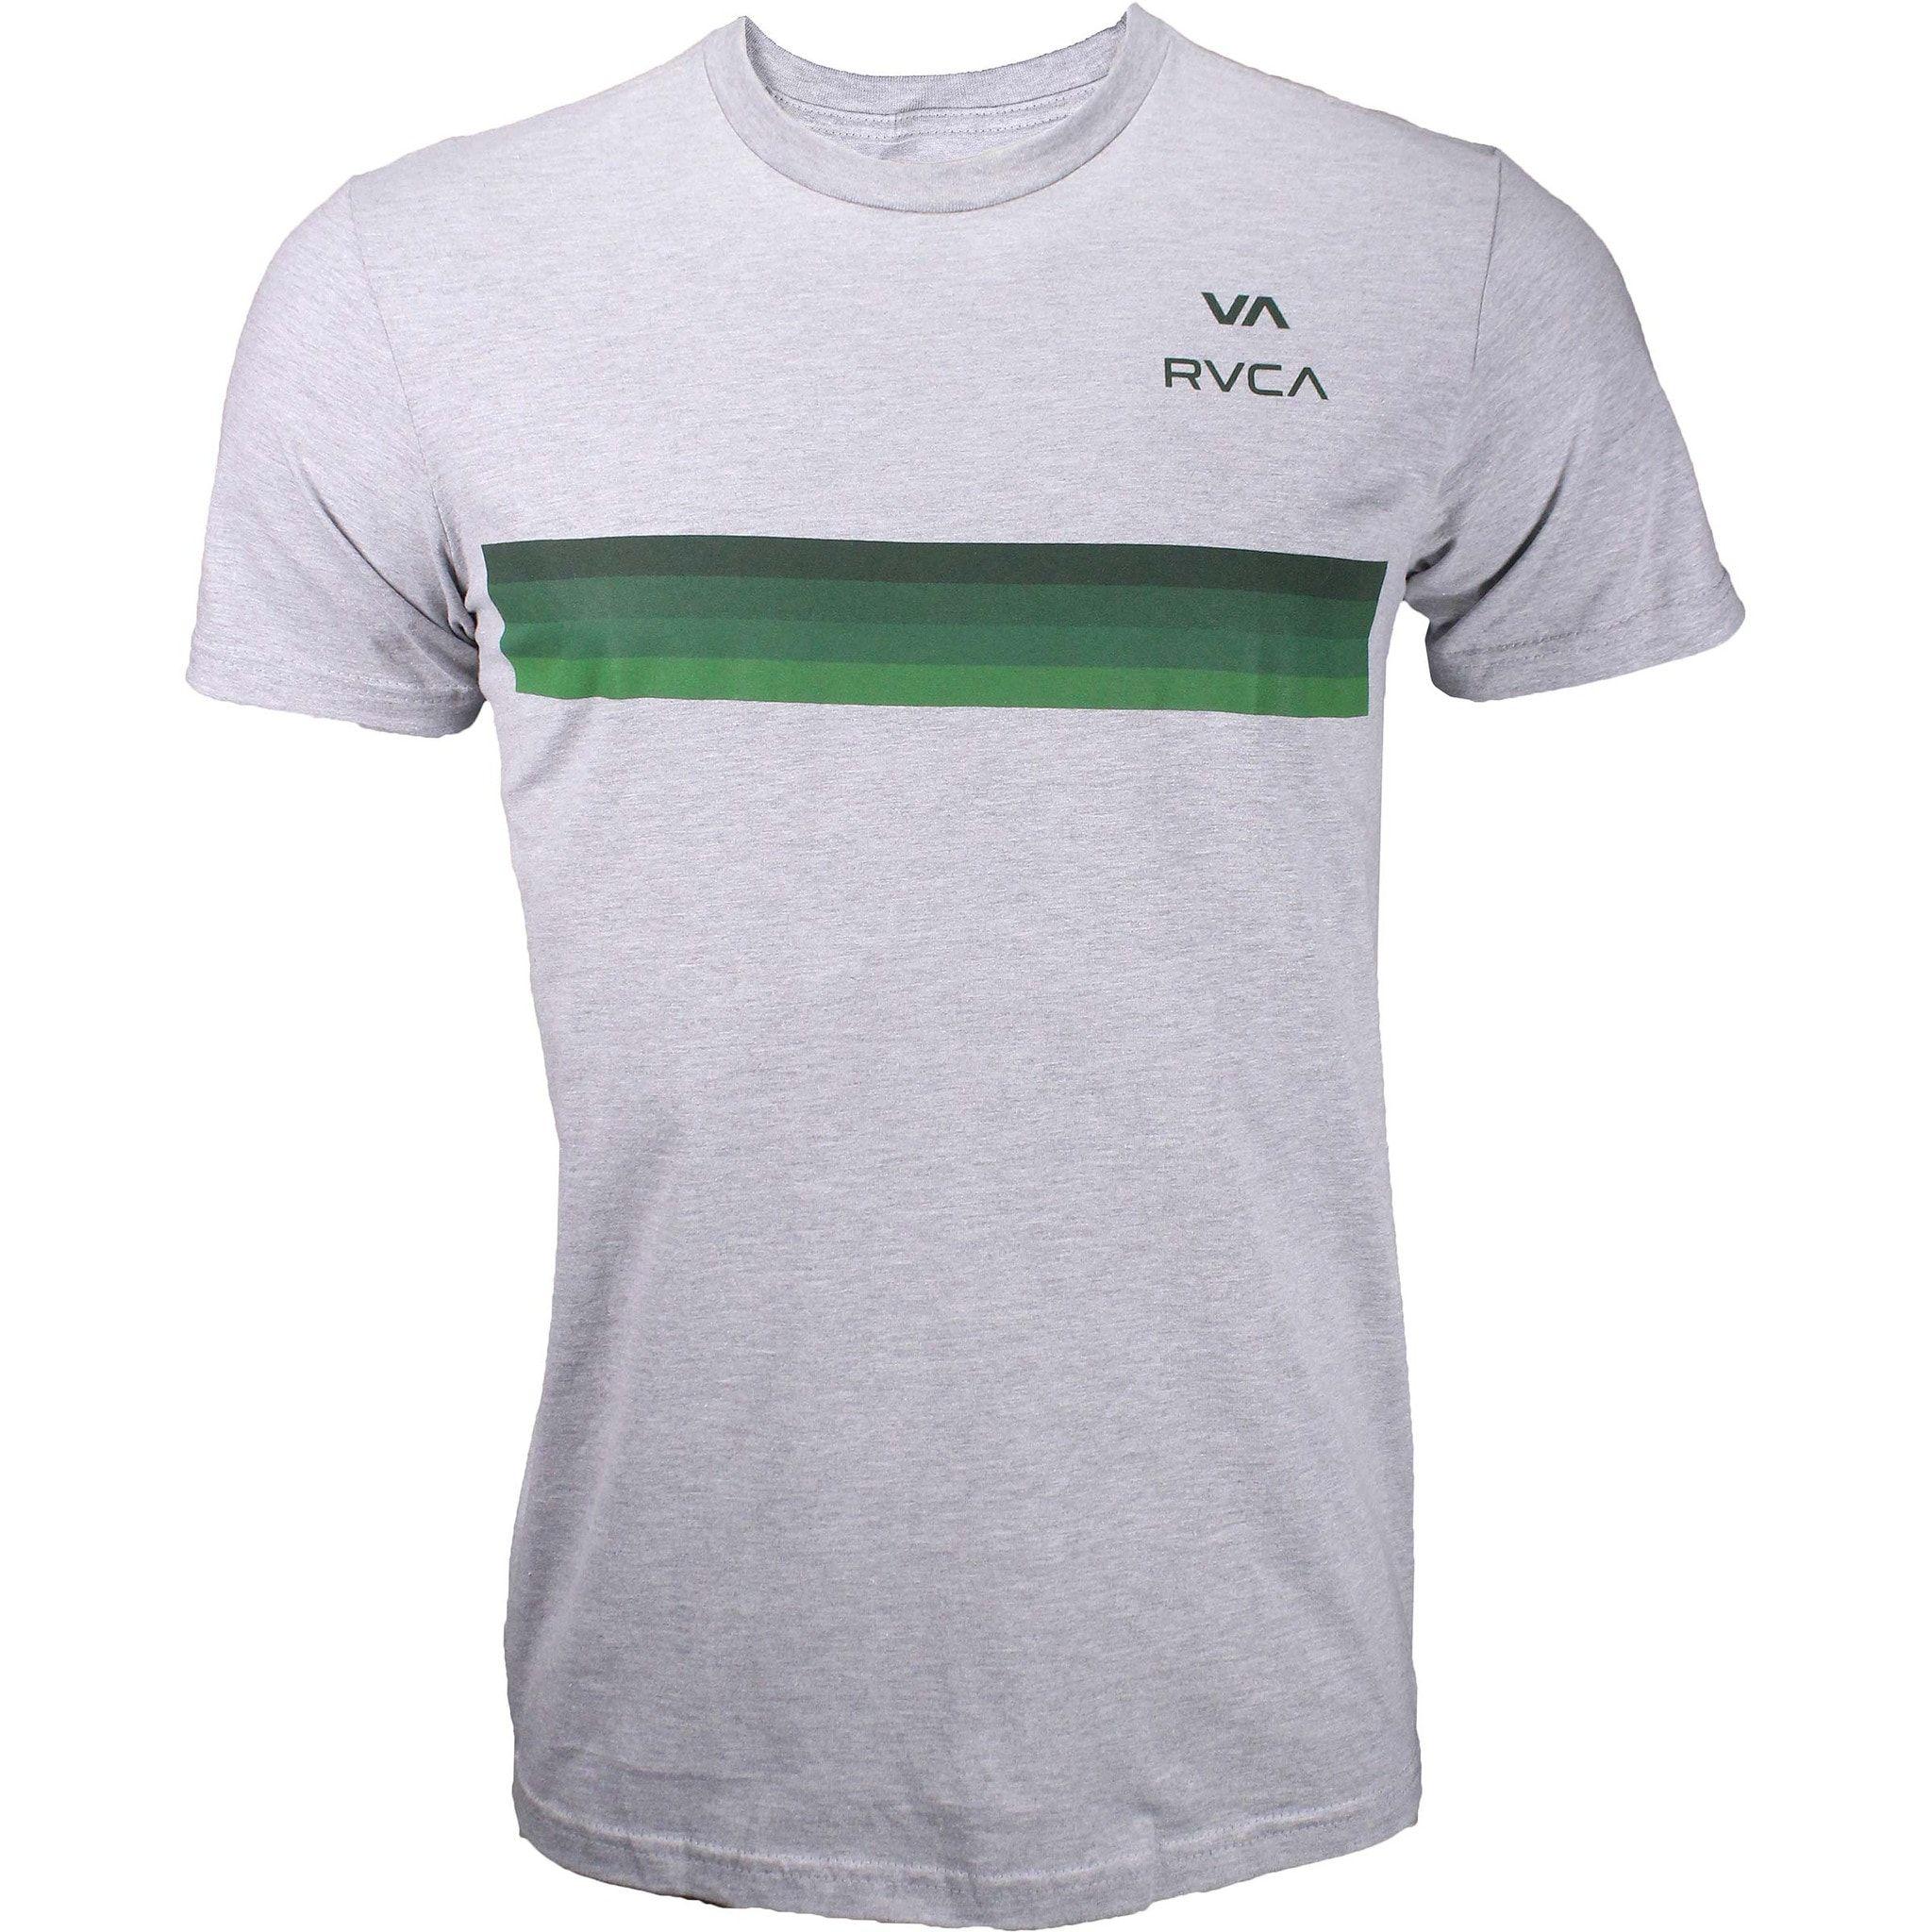 RVCA Clothing Logo - Listed Price: $25.99 Brand: RVCA RVCA VA Horizon Shirt Short sleeve